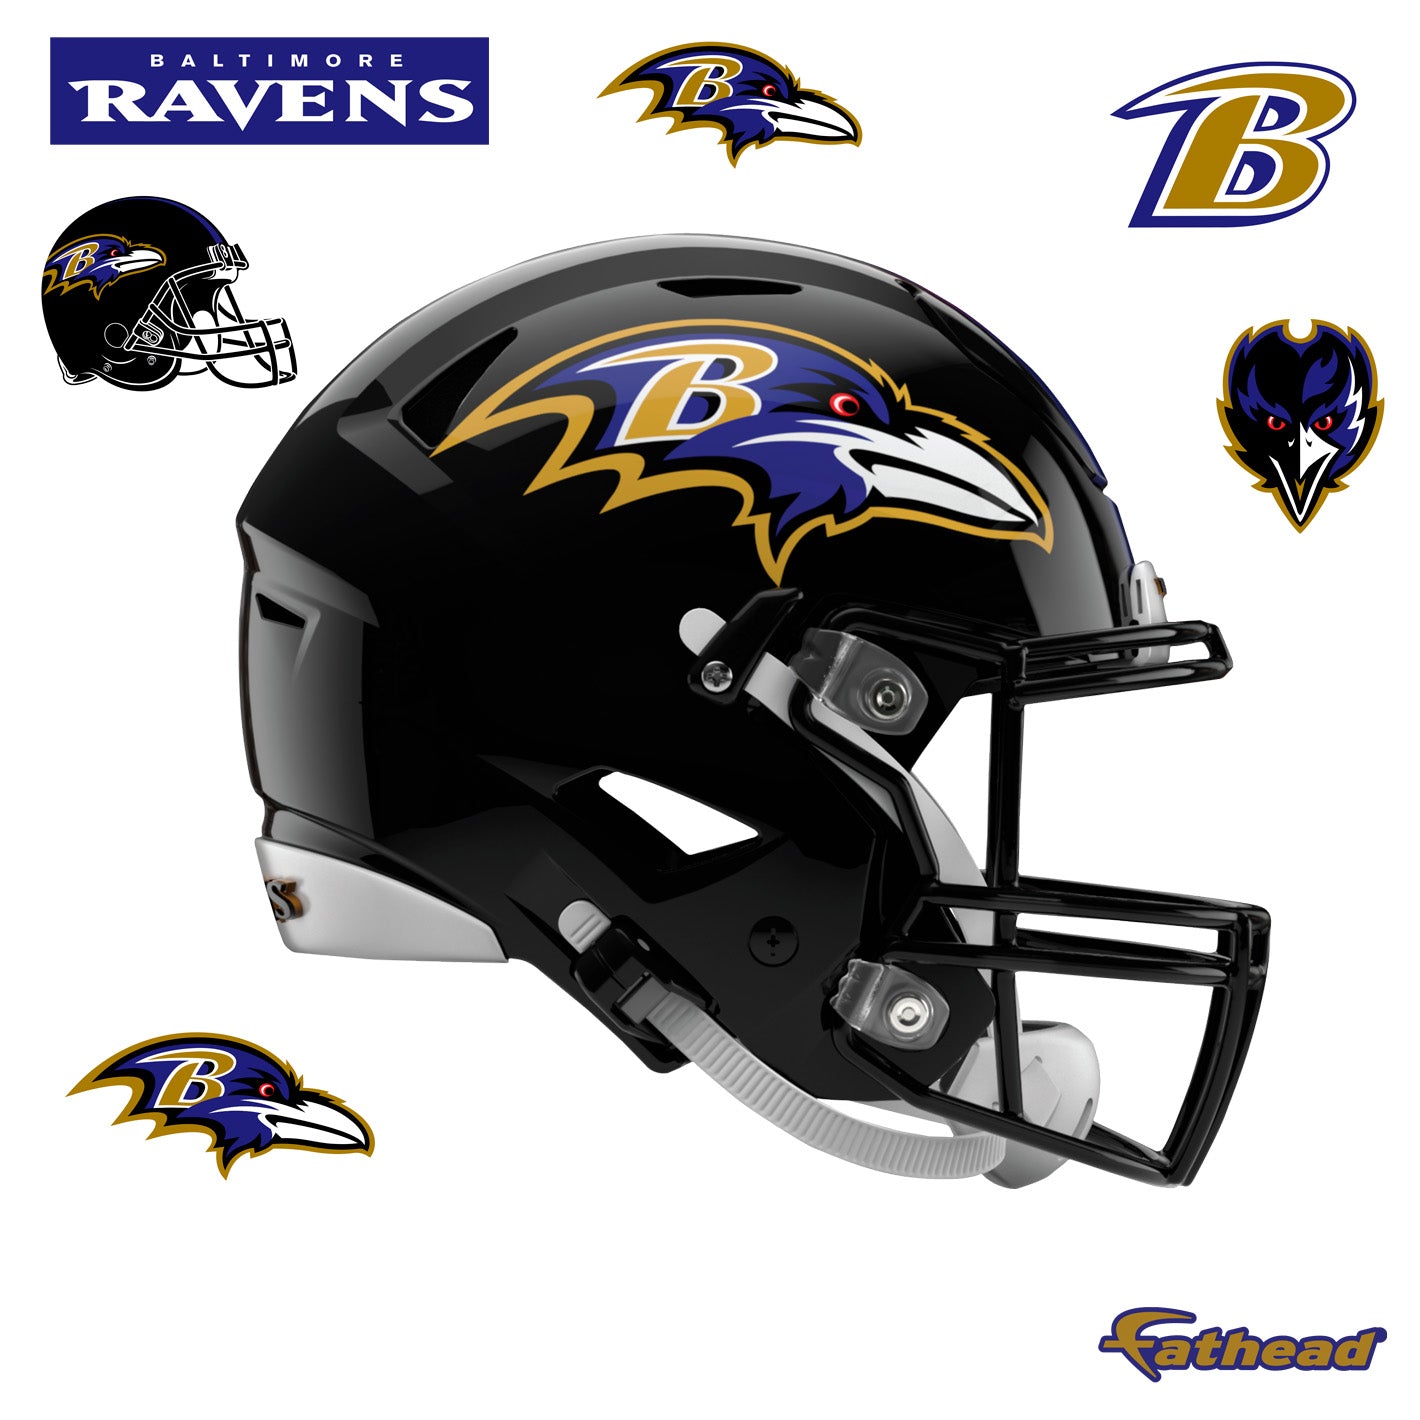 Baltimore Ravens LED Wall Decor Football Helmet